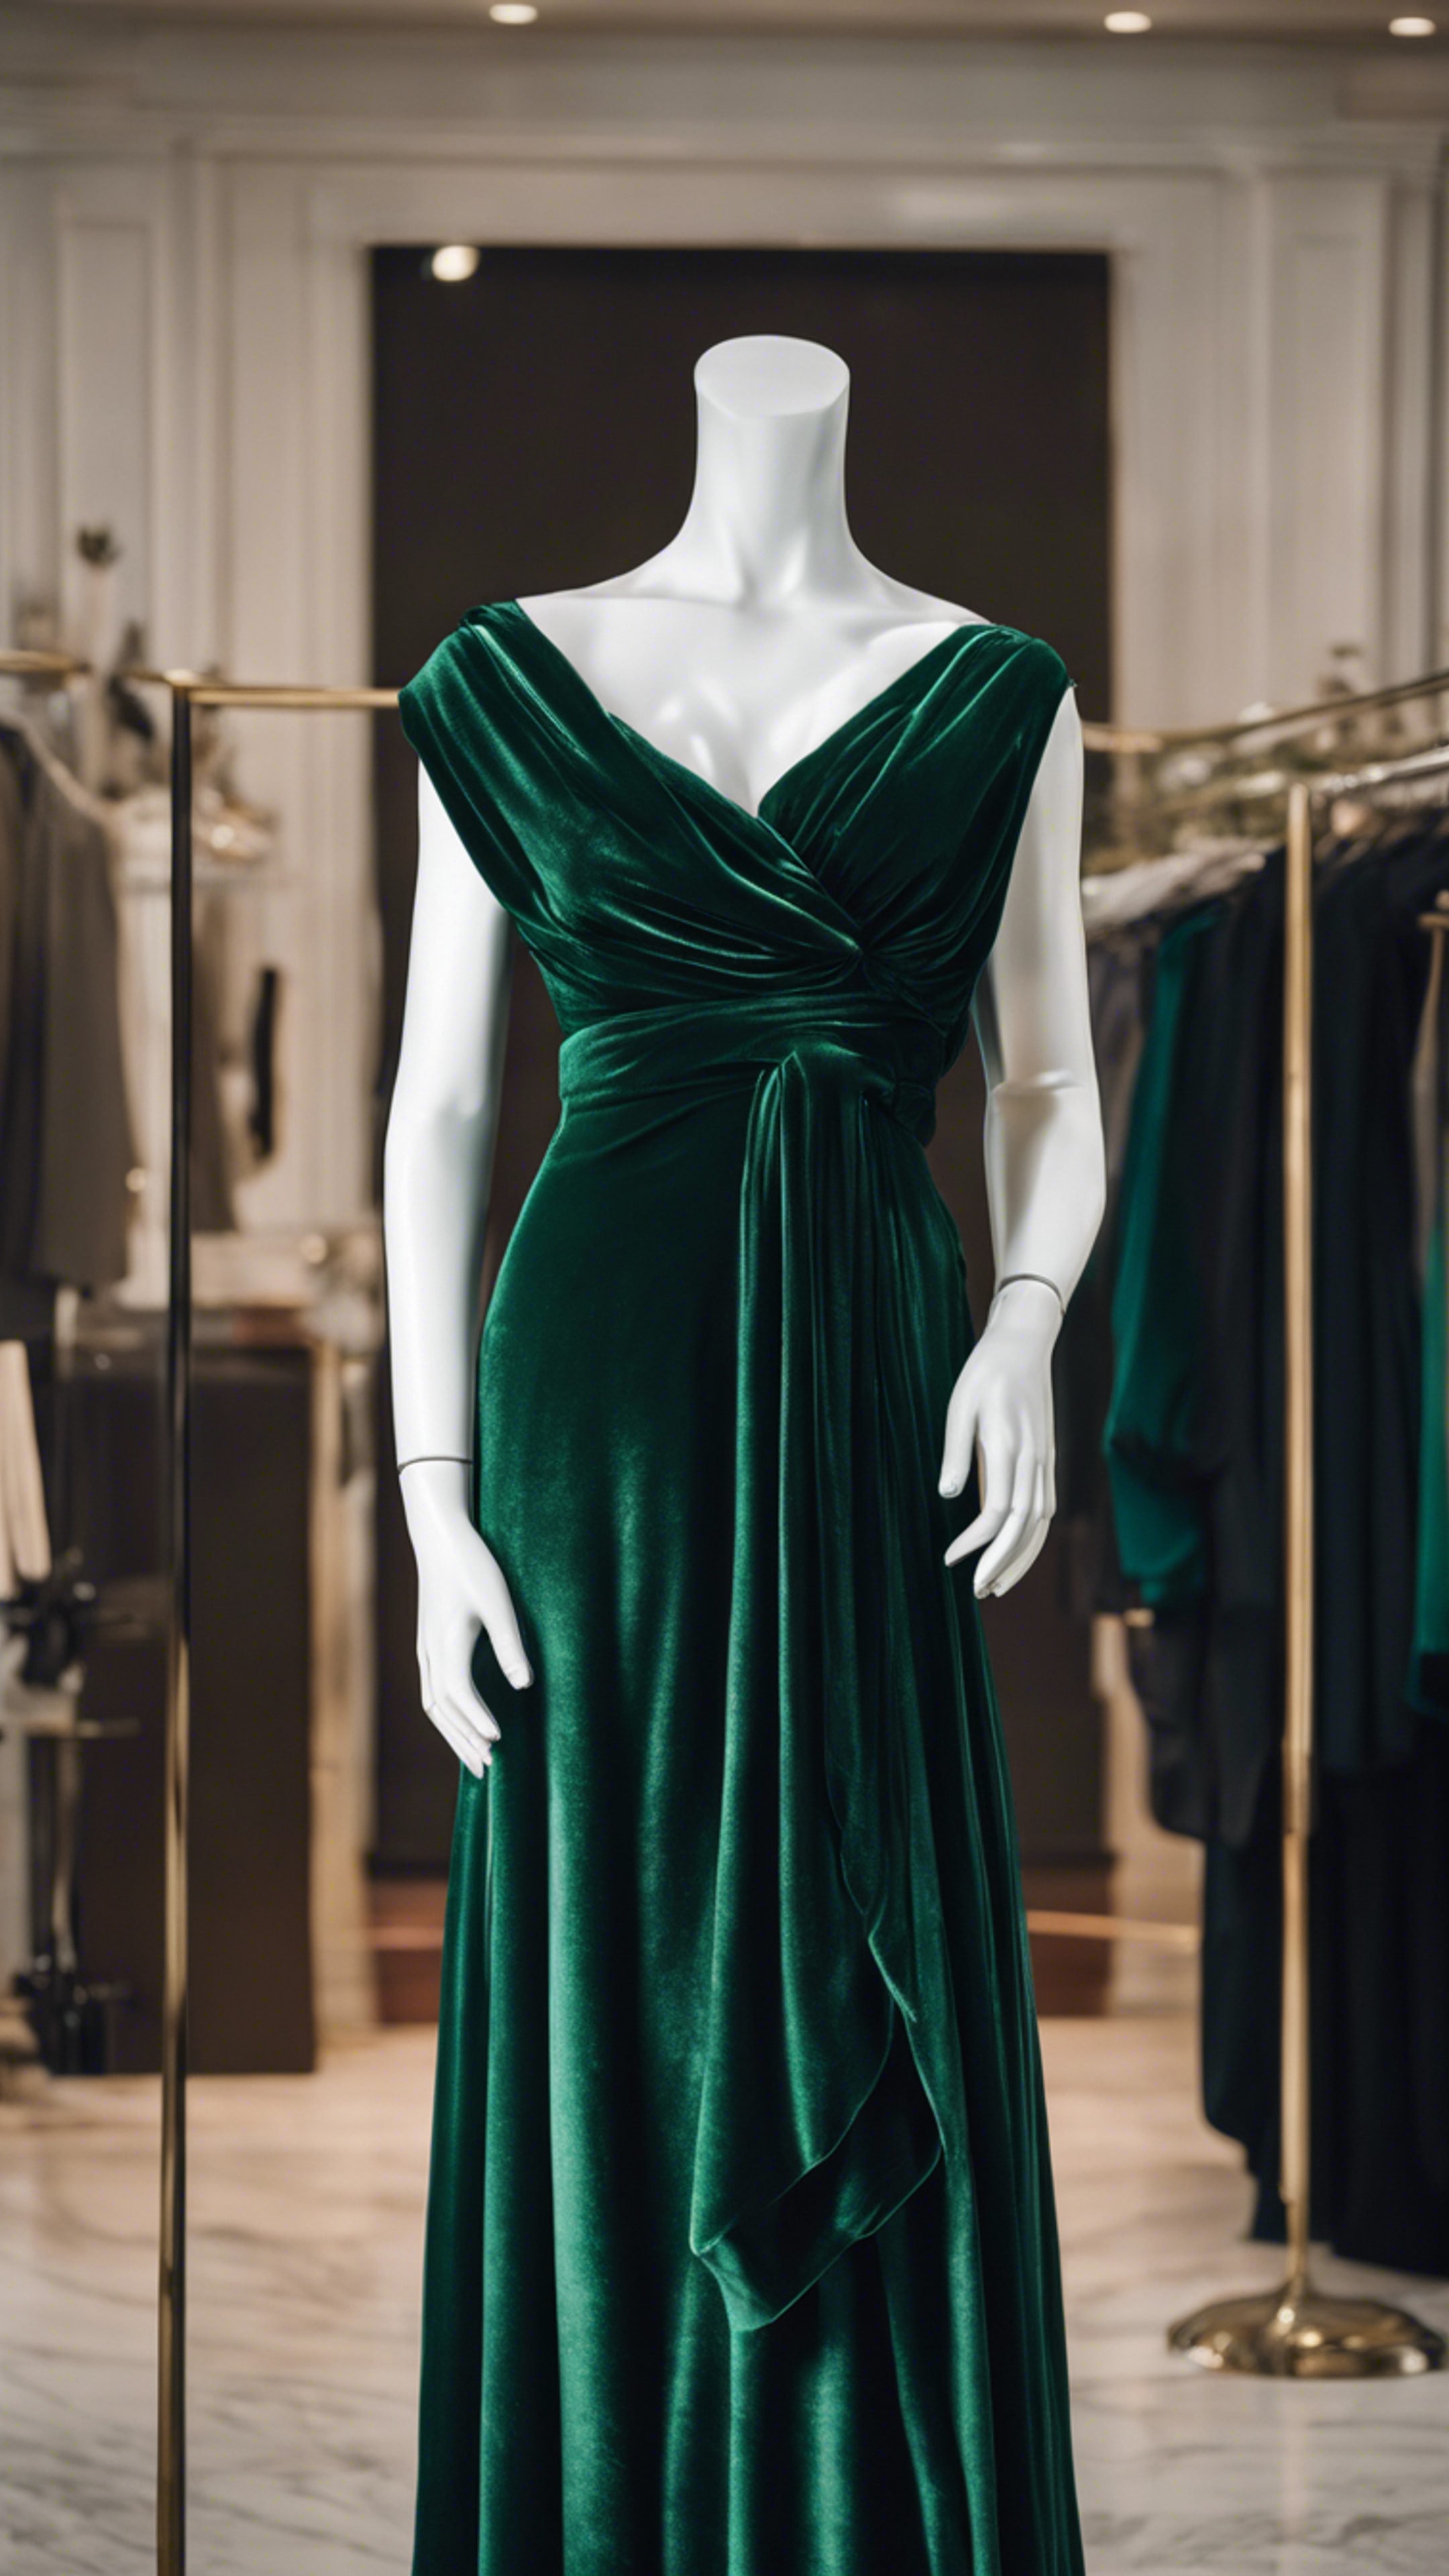 A classy dark green velvet dress draped on a mannequin. Wallpaper[4958bfaa75d040bb9909]